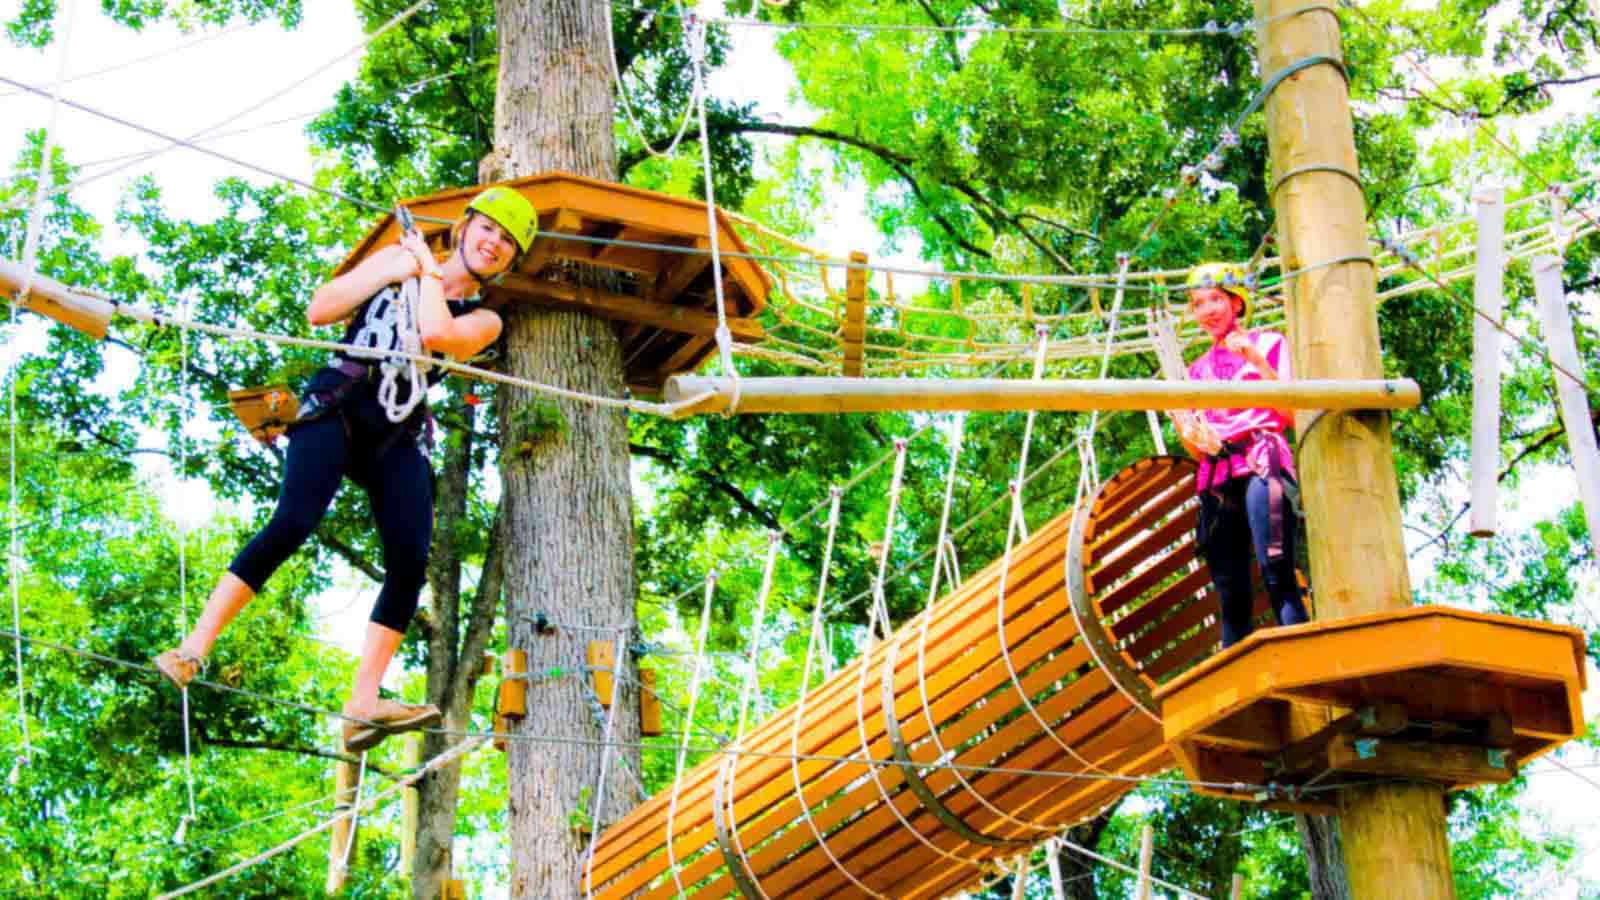 Adventure Designs builds adventure parks. Recreationsl family fun. Sky bridges, basket crawls, hanging nets, ziplines, and more